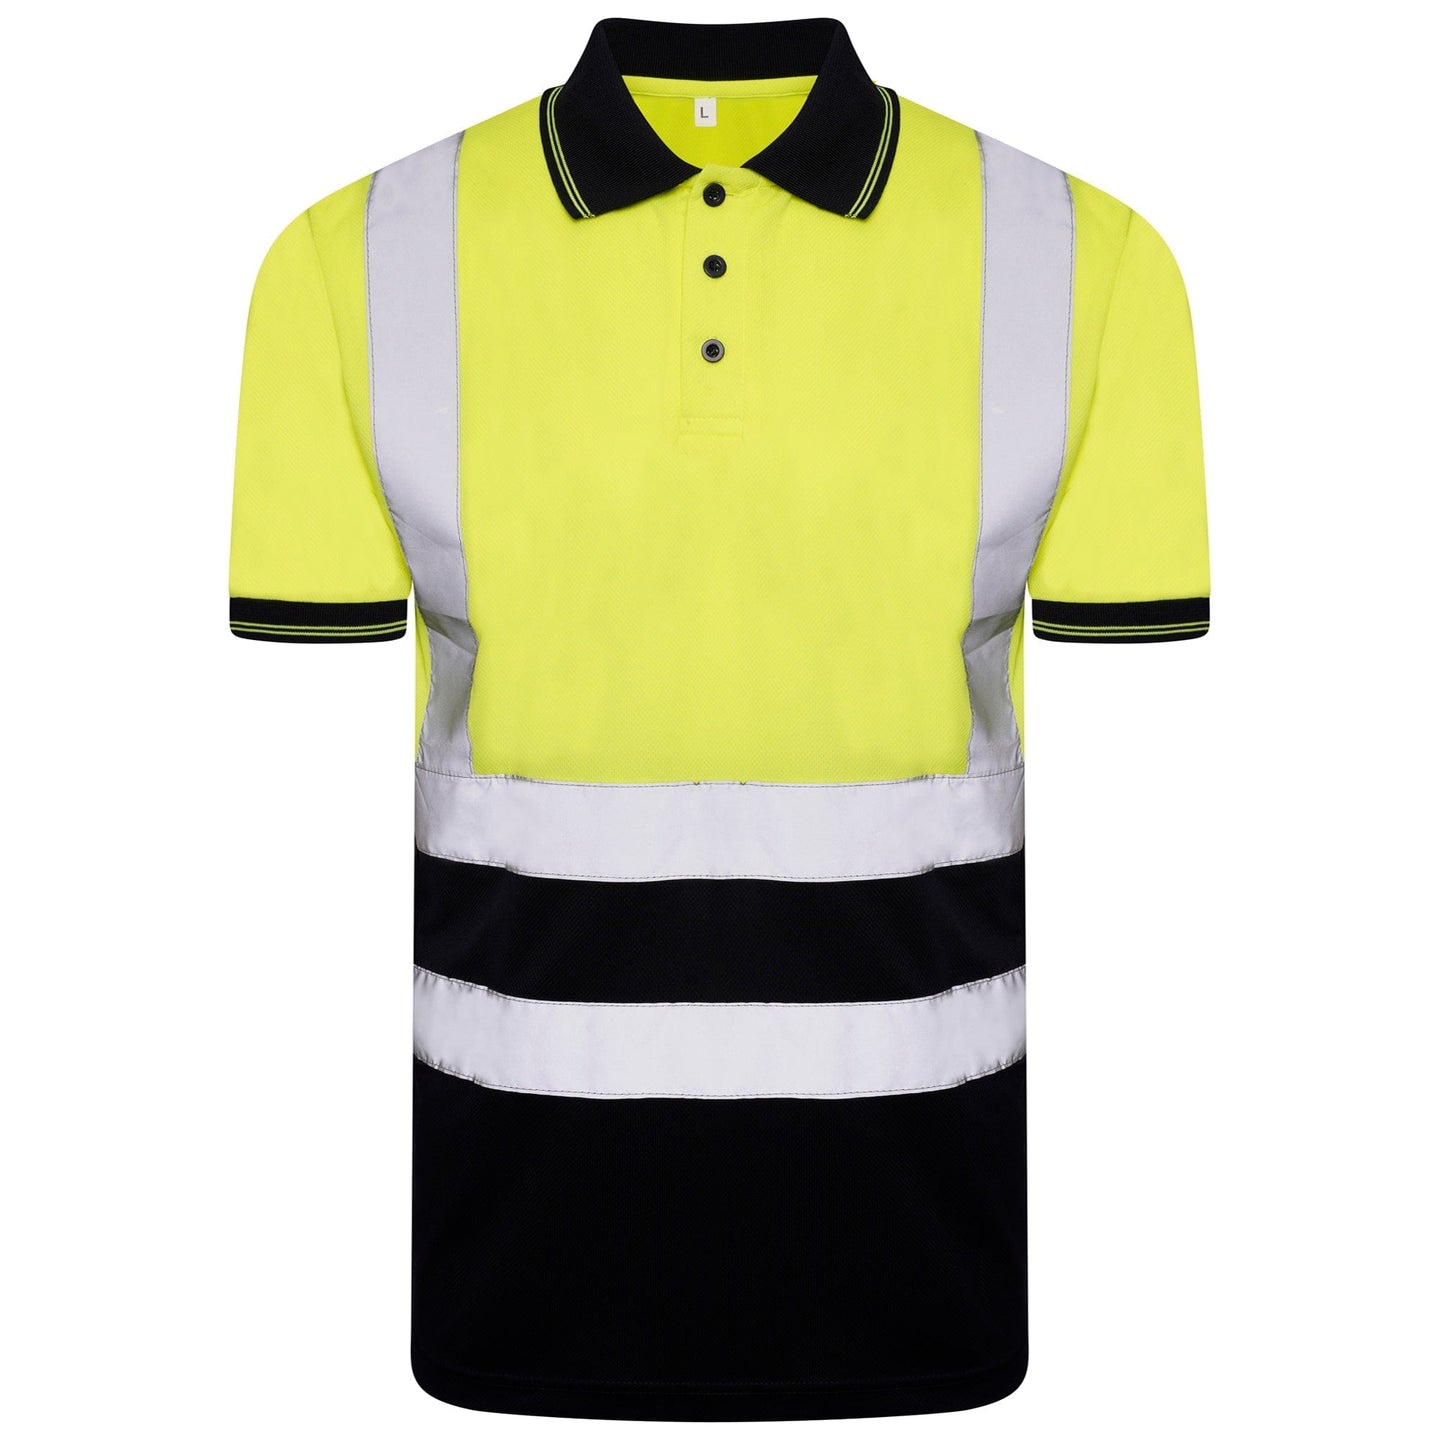 Aviator London S / YELLOW/NAVY ISO 20471 Class 2 Polo Shirt Yellow/Navy